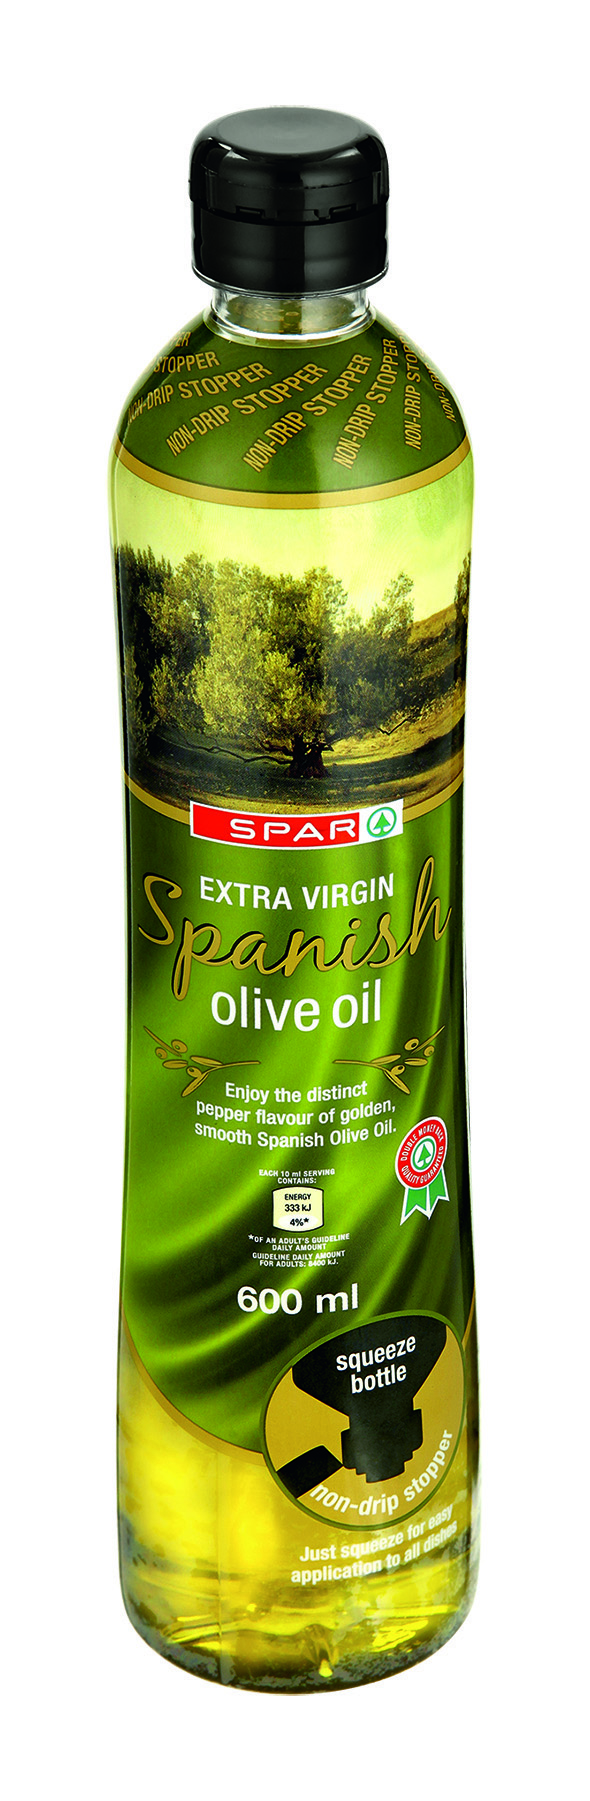 spanish extra virgin olive oil